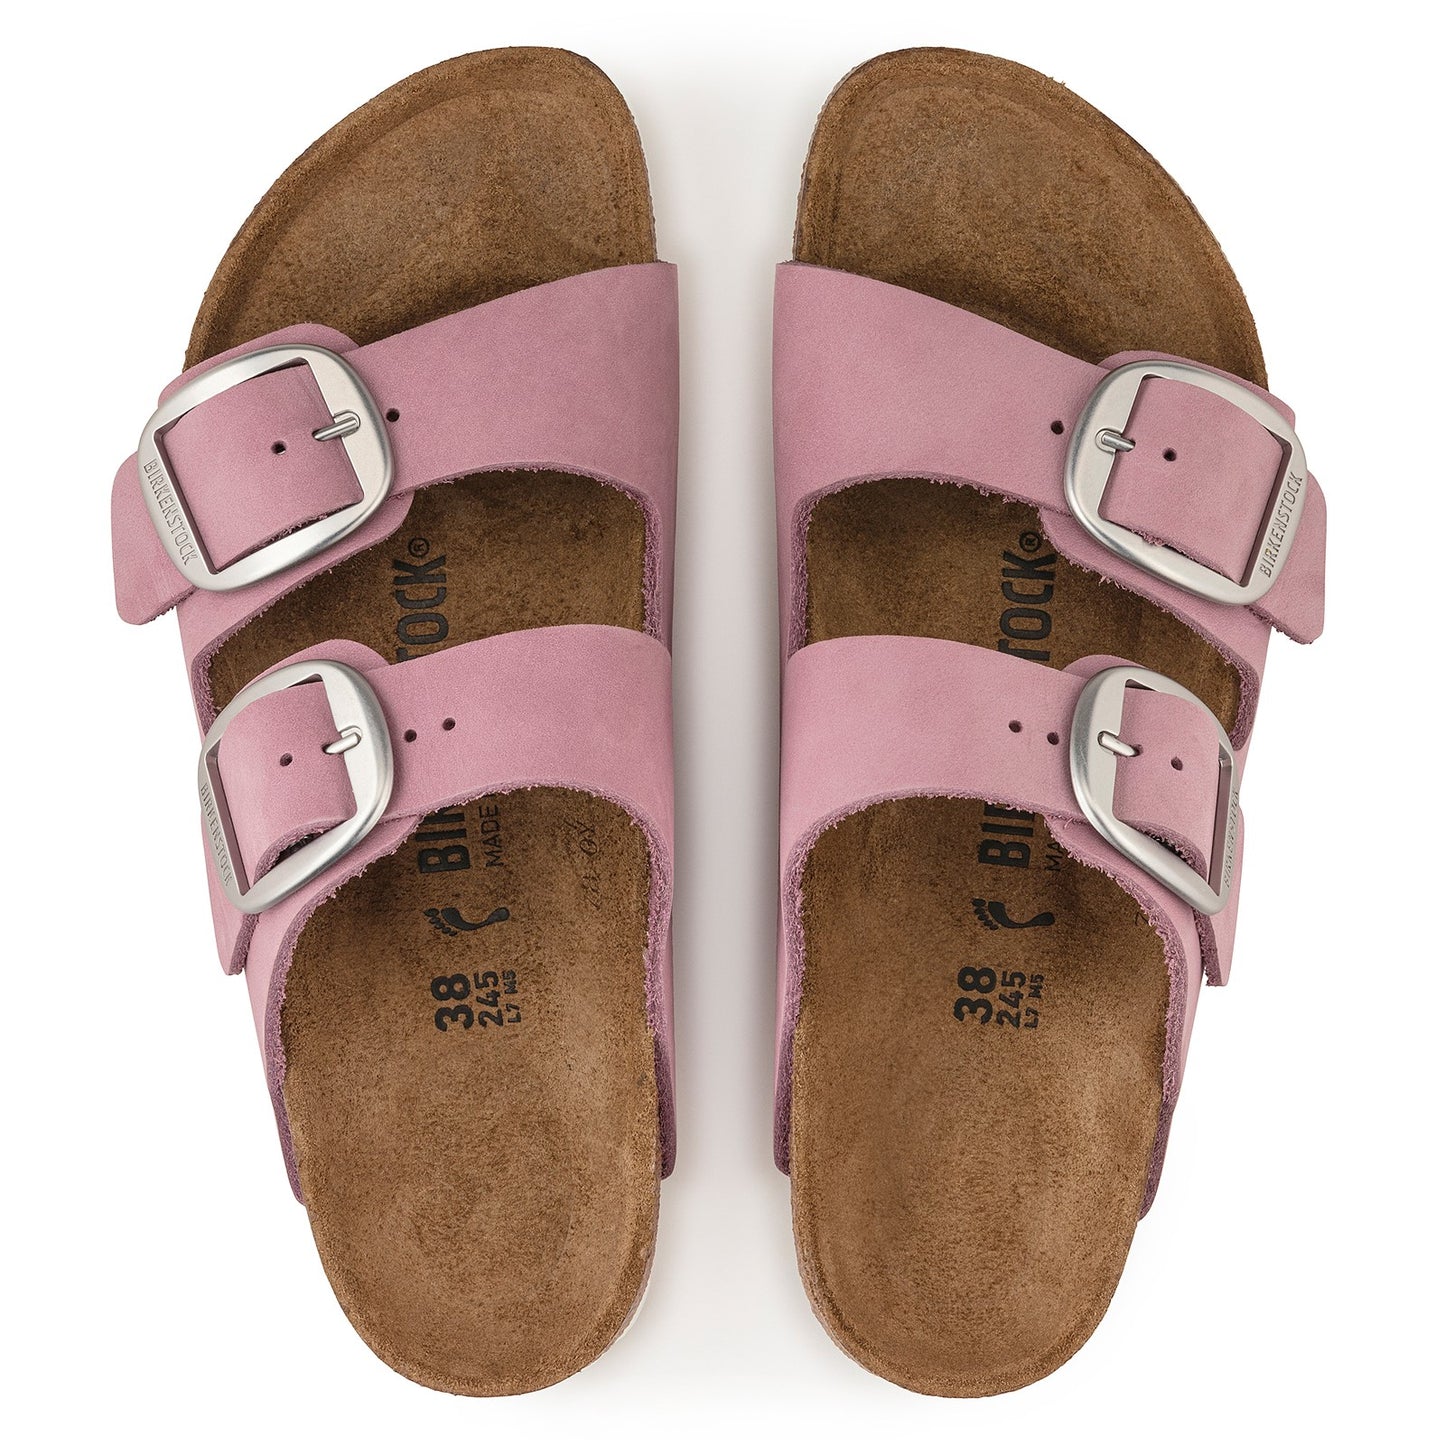 Peltz Shoes  Women's Birkenstock Arizona Big Buckle Sandal- Narrow Width ORCHID 1022 161 N